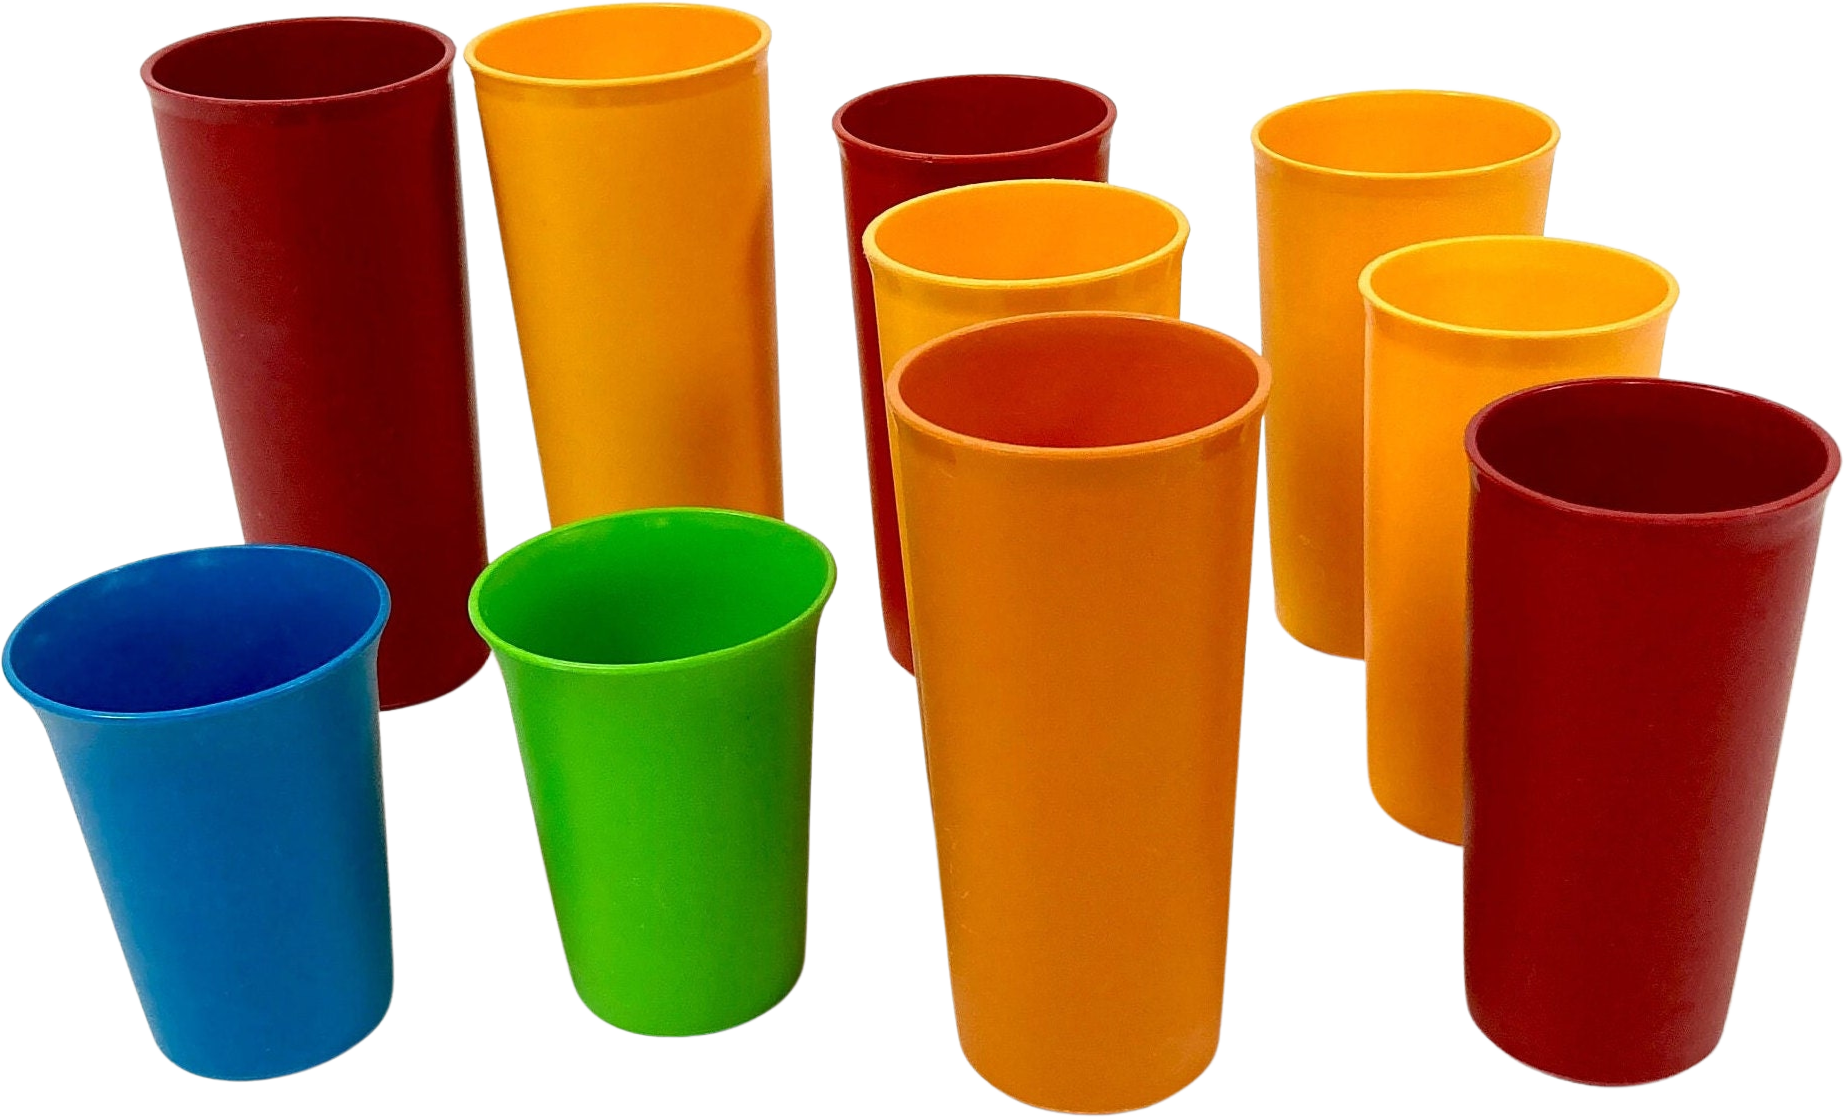 Vintage Tupperware plastic cups, tumblers primary colors set of 3, 80s  kitchen, retro kitchen